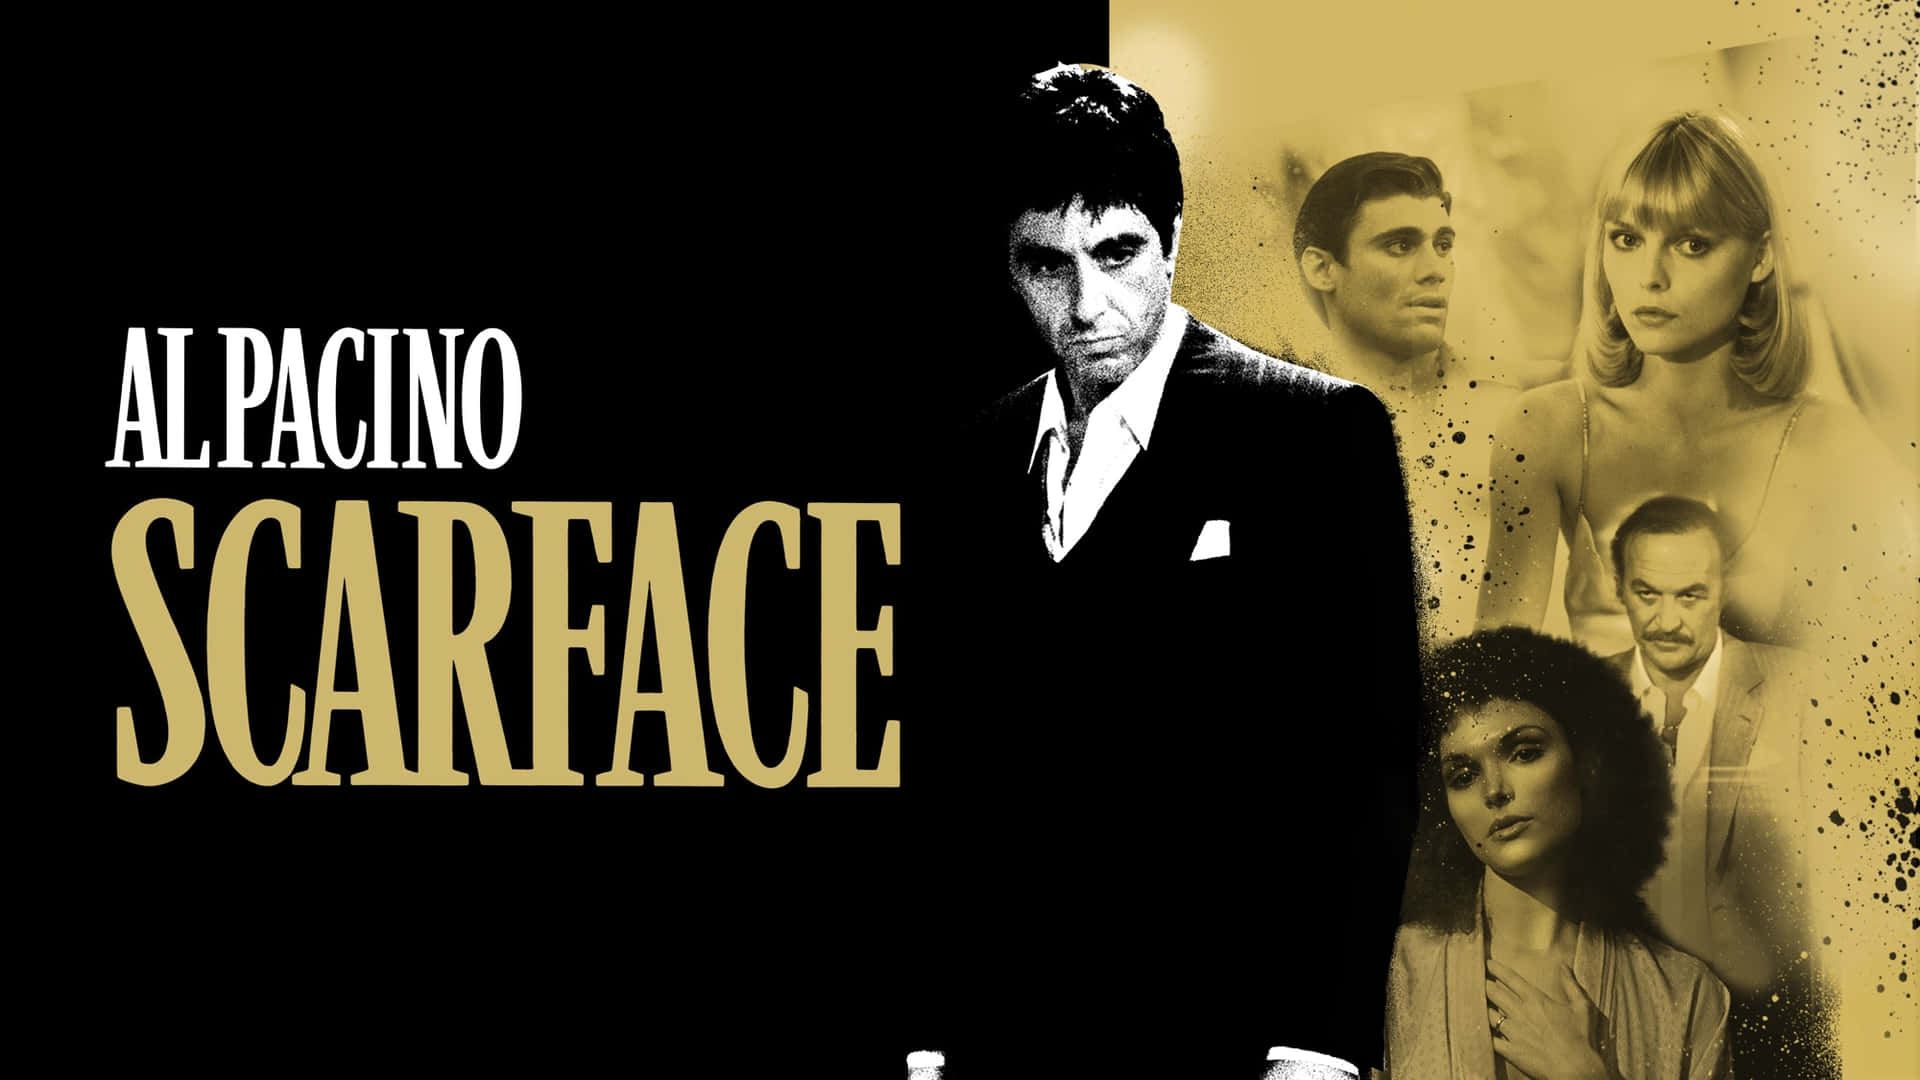 Al Pacino Scarface Movie Collage Wallpaper